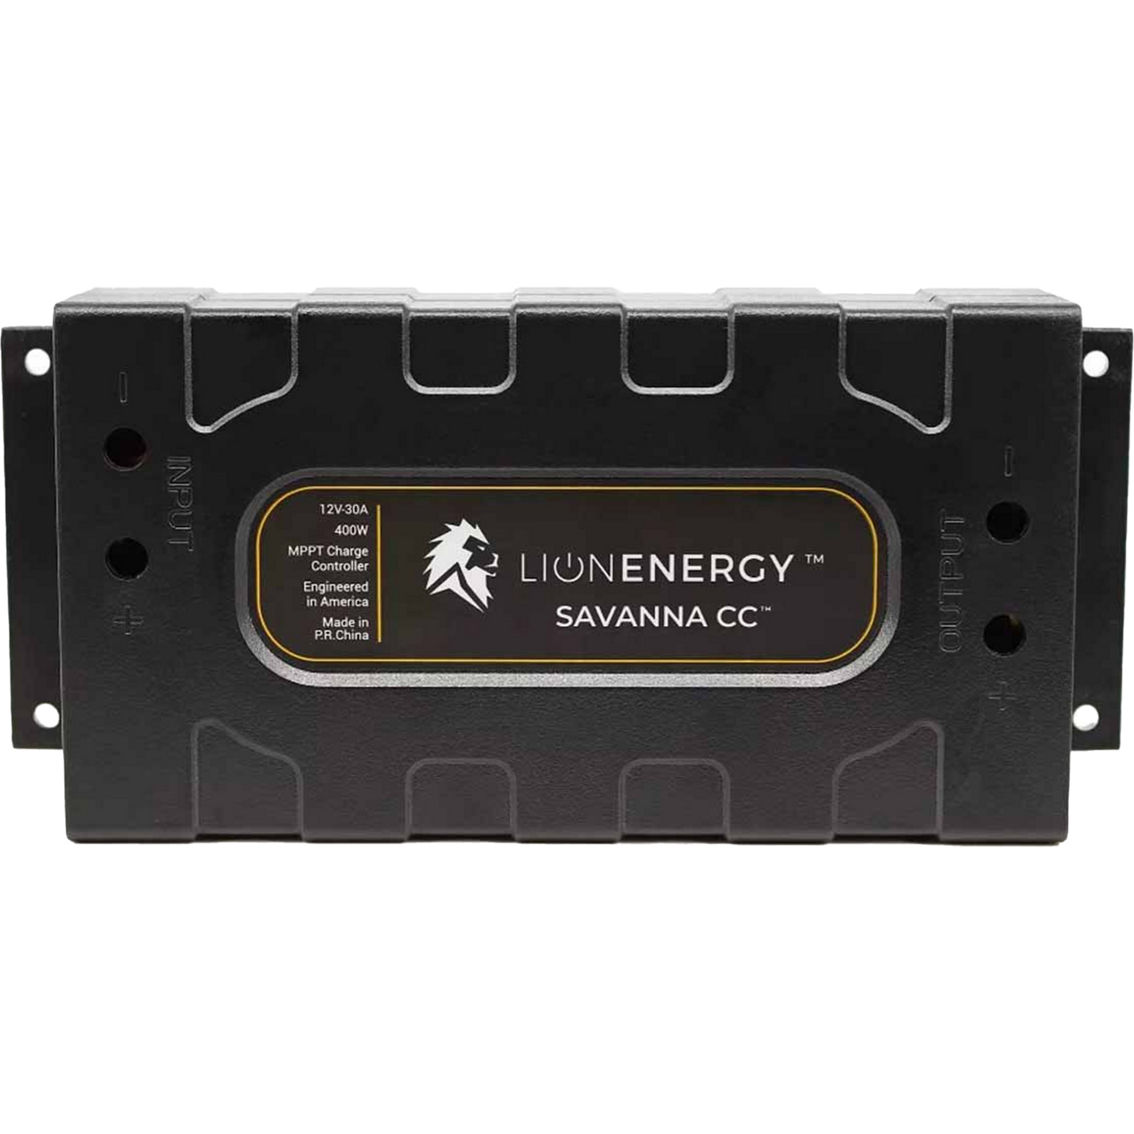 Lion Energy Savanna CC Solar Charge Controller - Image 3 of 3